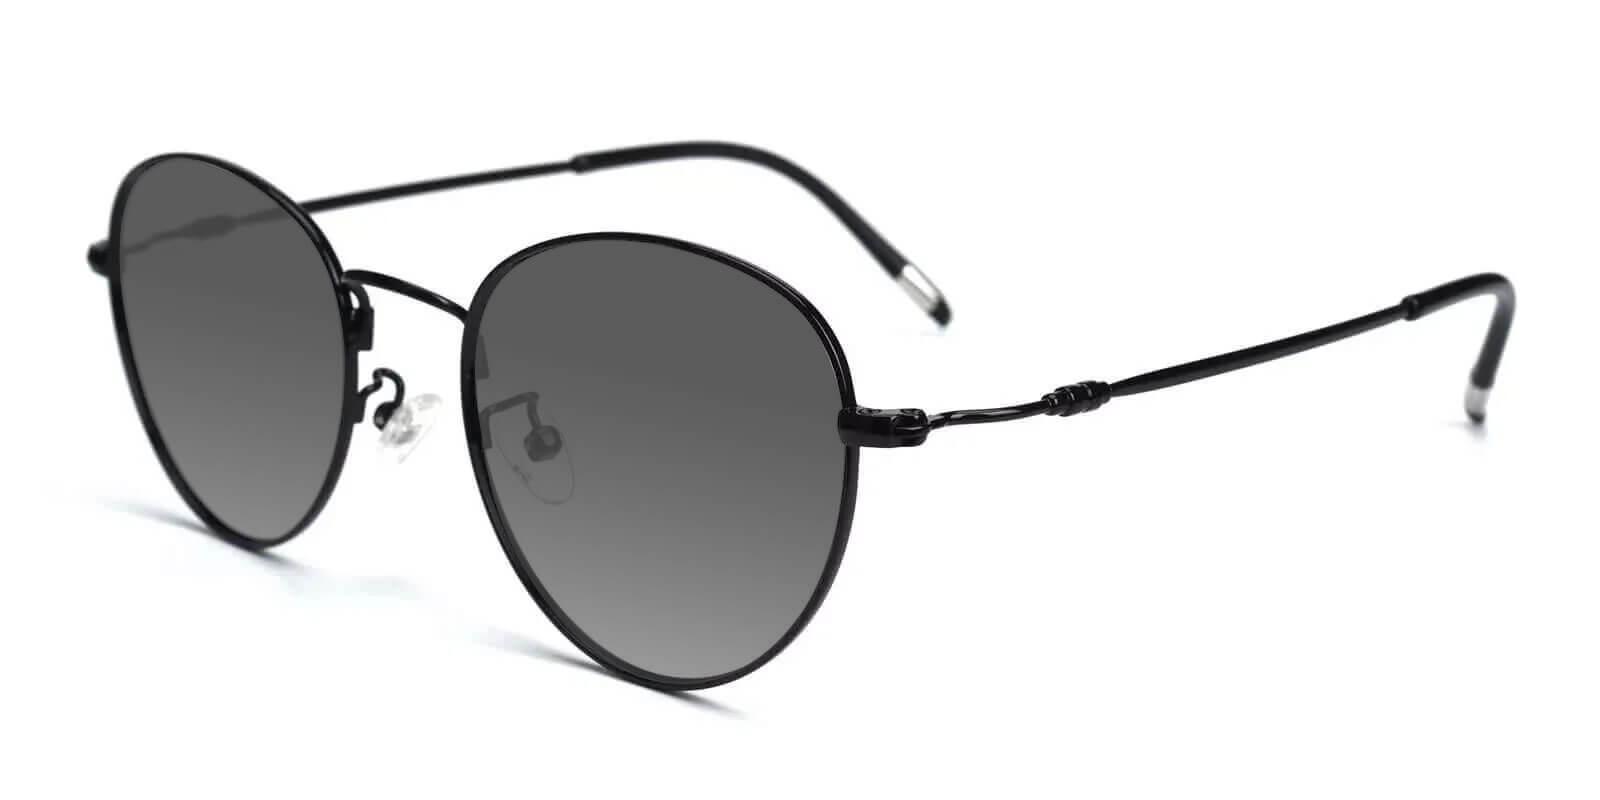 Coxon Black Metal Lightweight , NosePads , Sunglasses Frames from ABBE Glasses